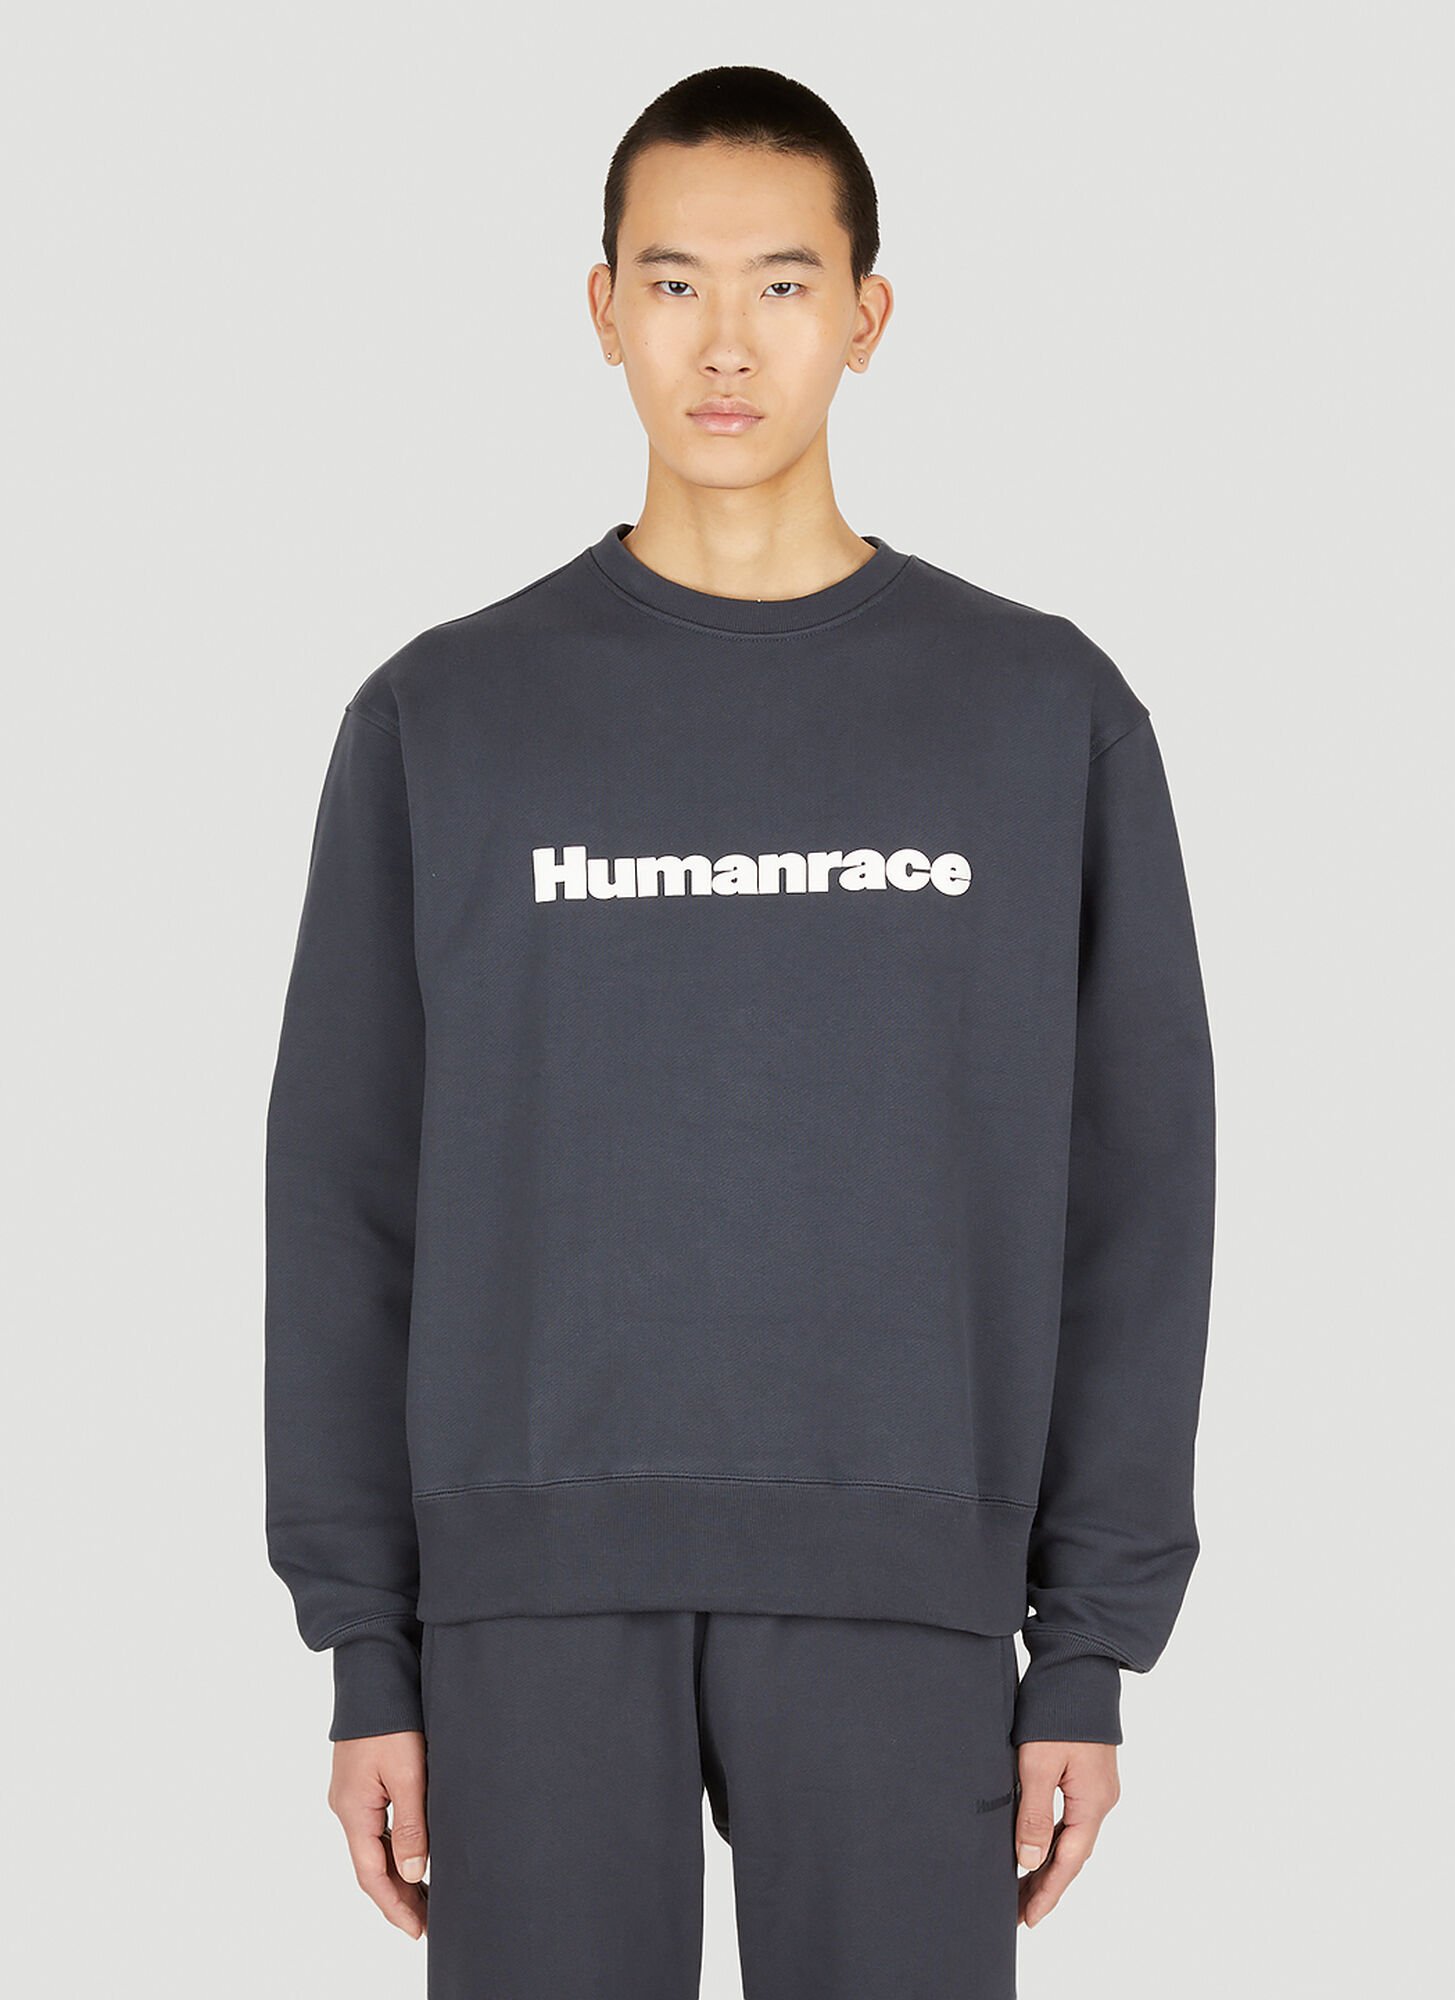 Adidas X Humanrace Basics Sweatshirt Male Black